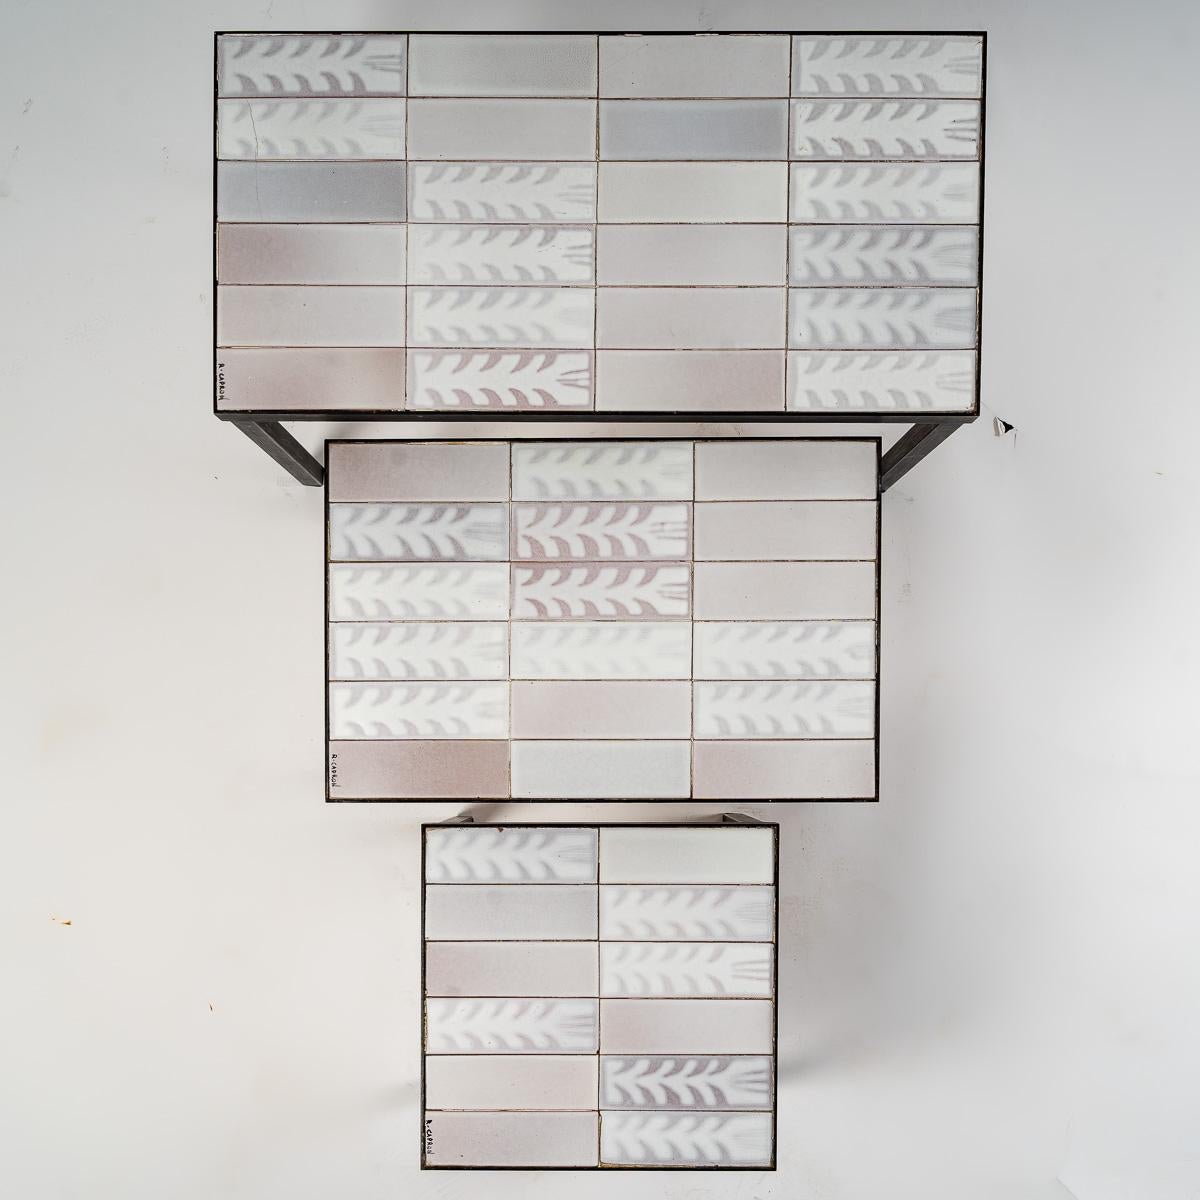 Mid-Century Modern Table Gigognes of Roger Capron, Design of the 20th Century, White Ceramic